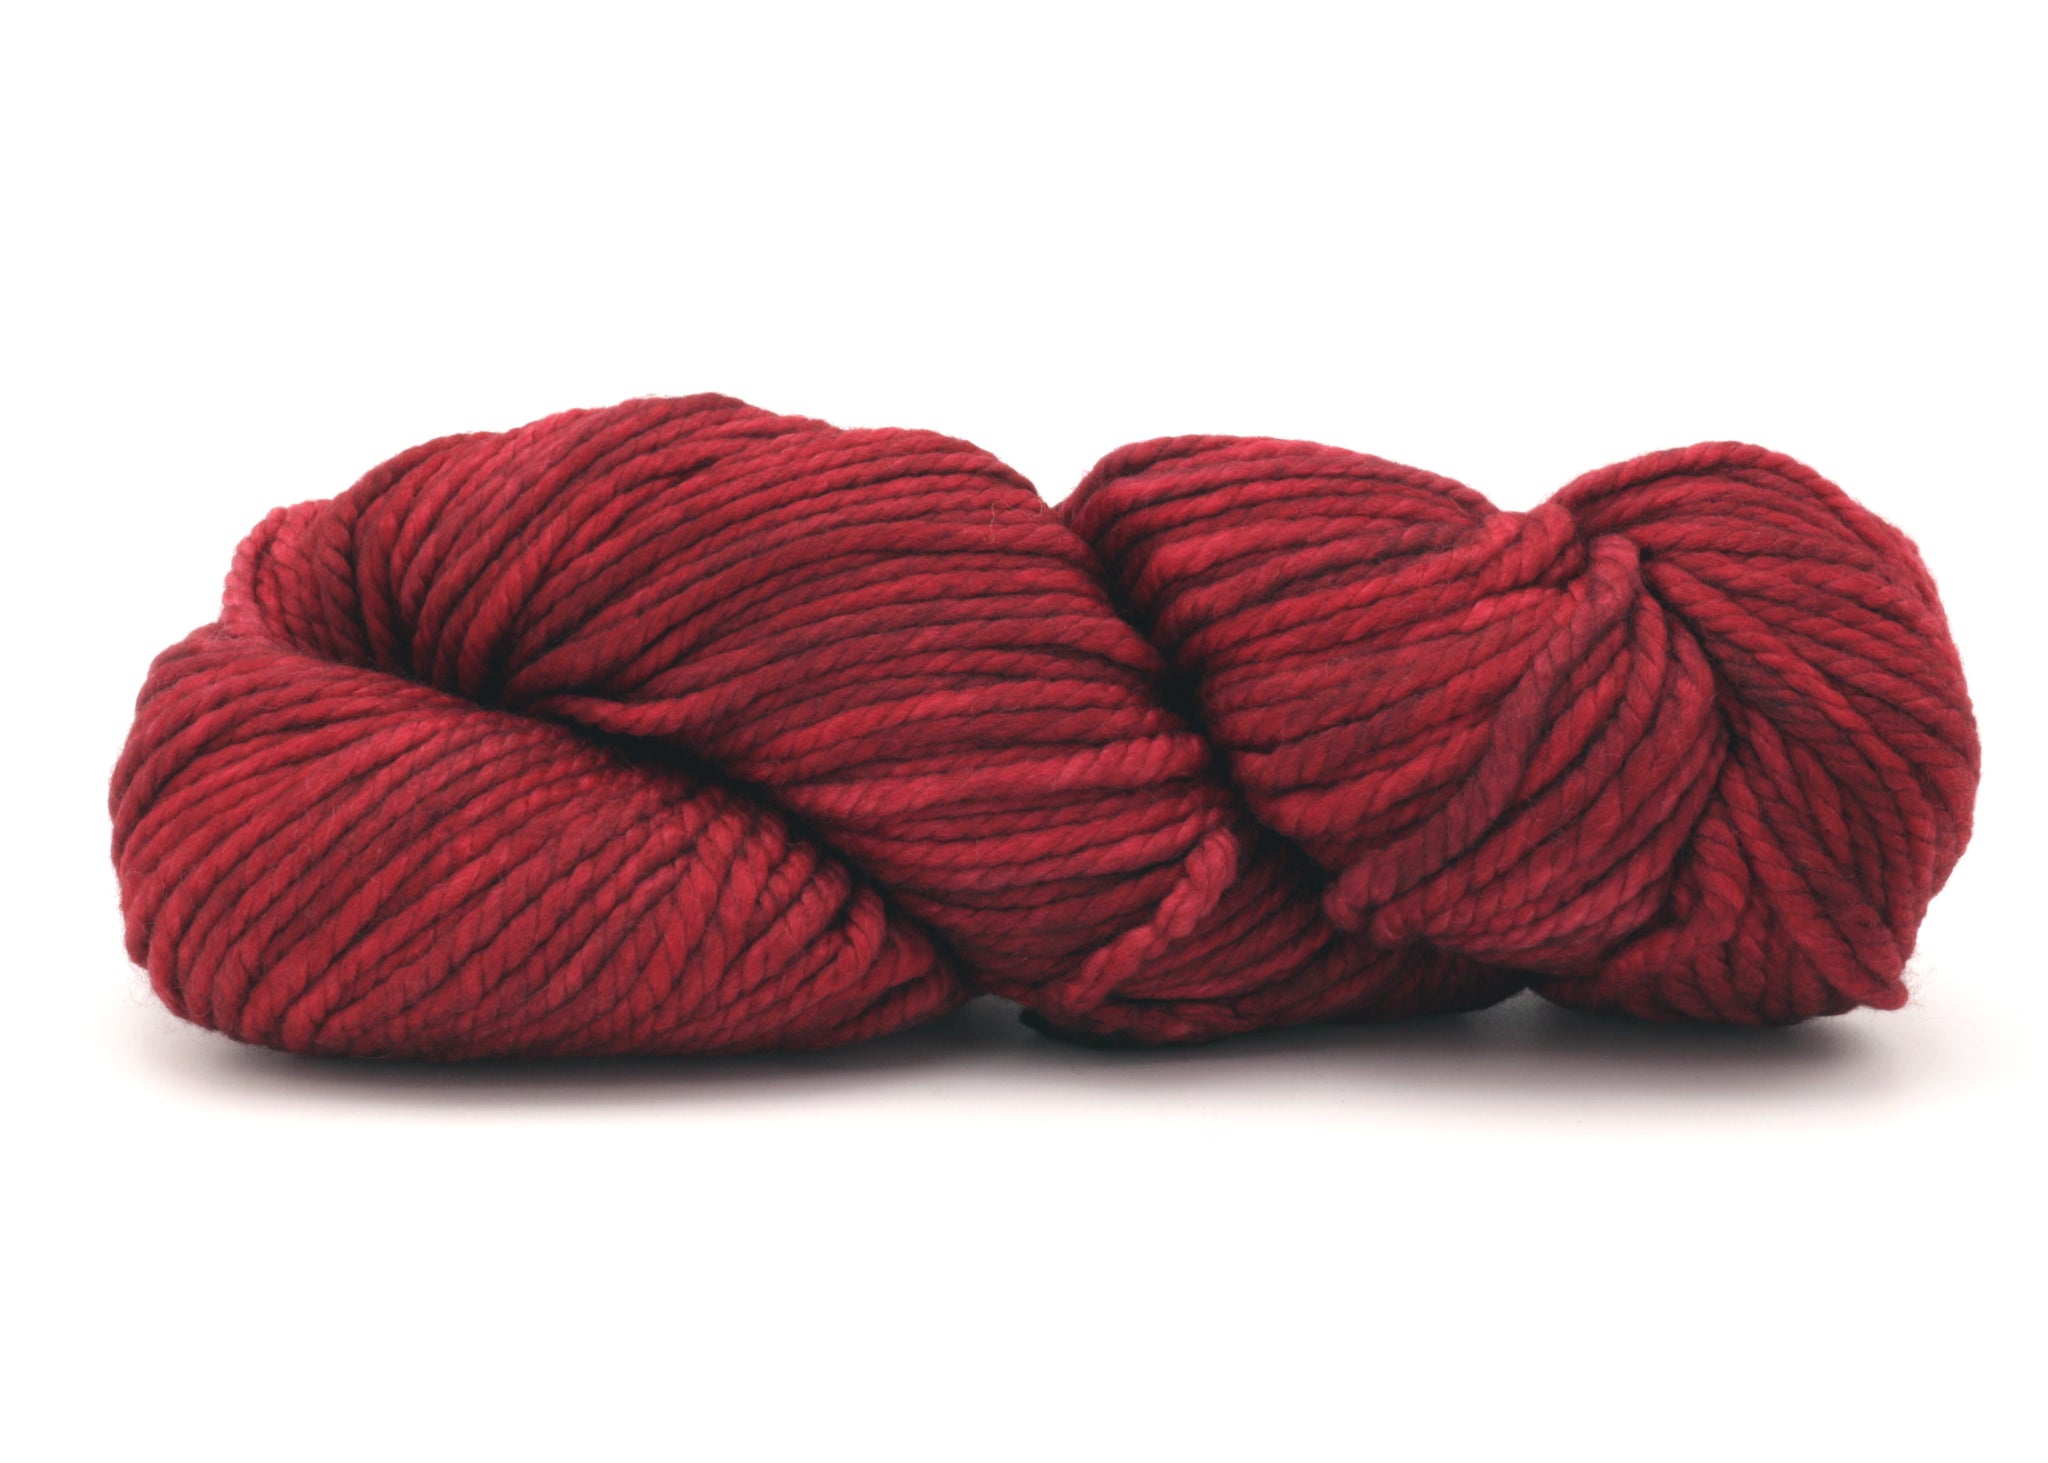 Malabrigo Chunky 179 Black Forest – Wool and Company